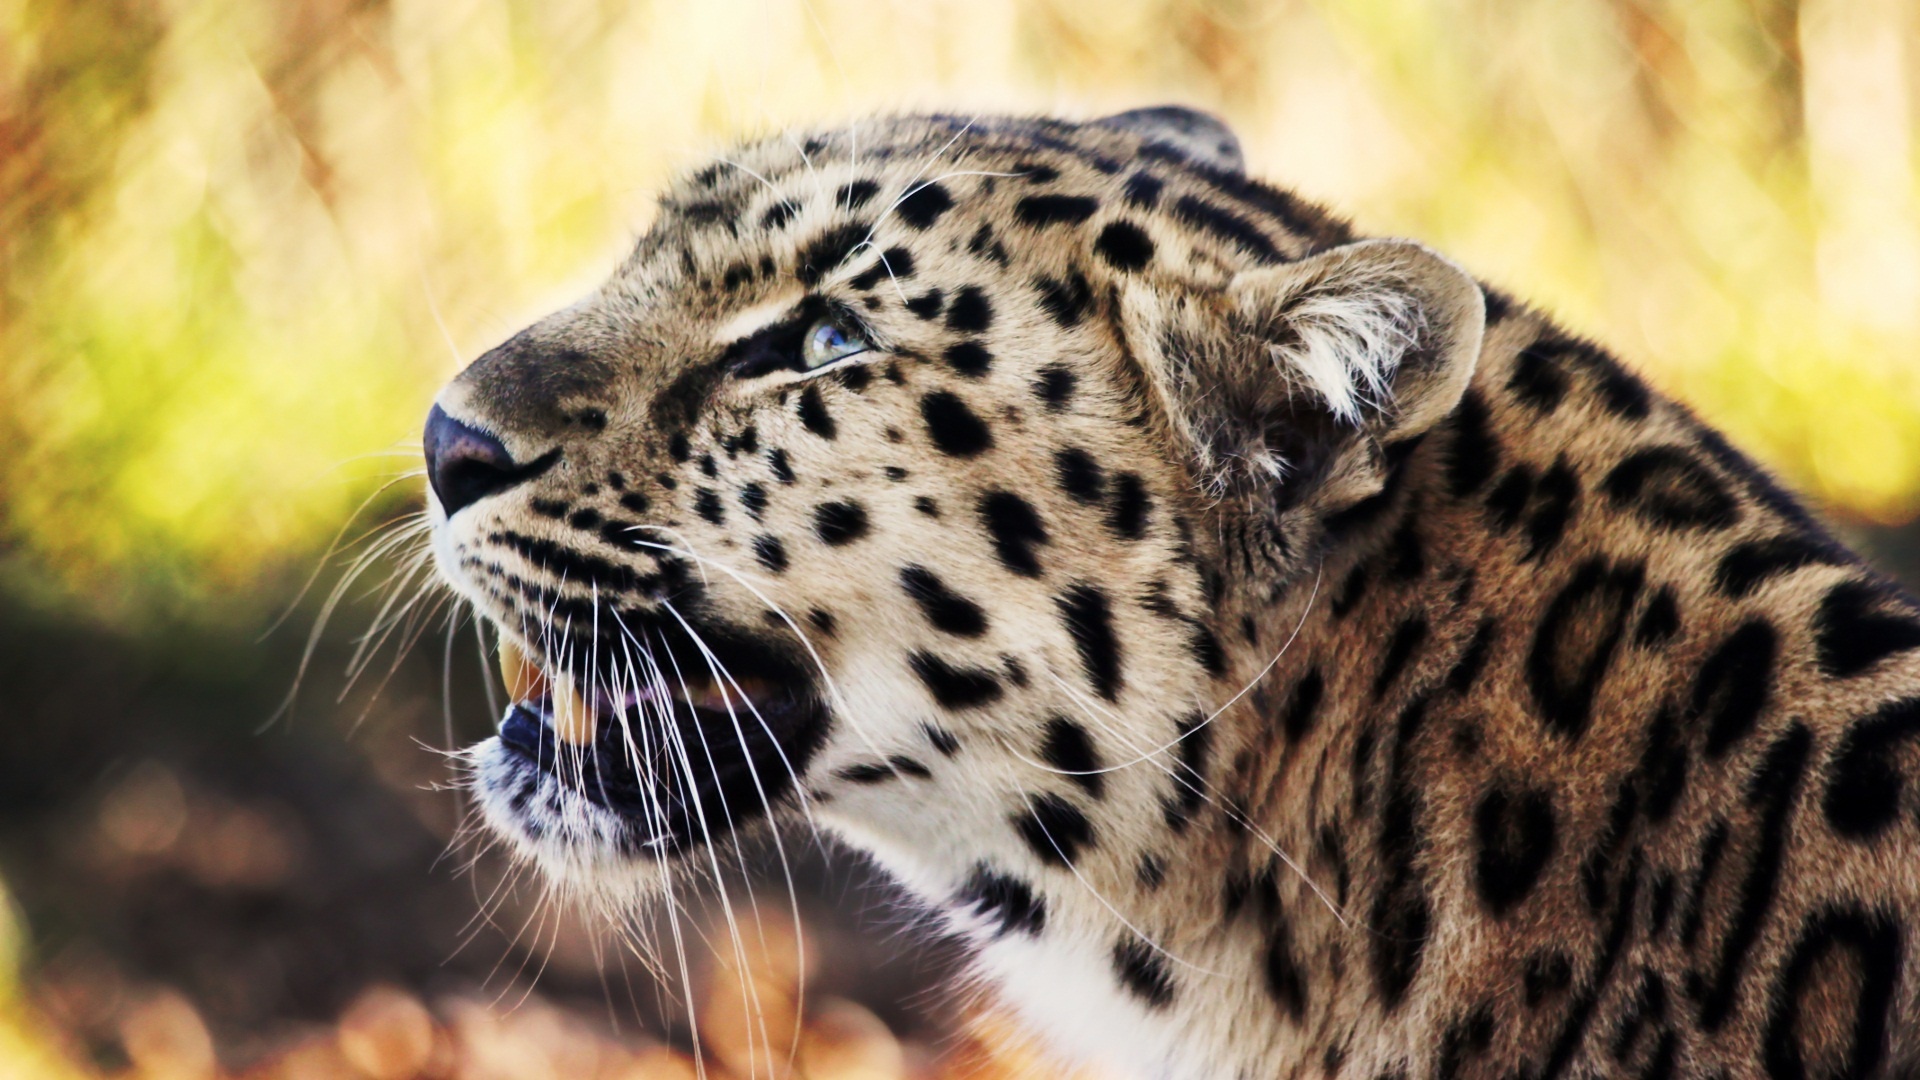 leopard_1080p-1920x1080.jpg